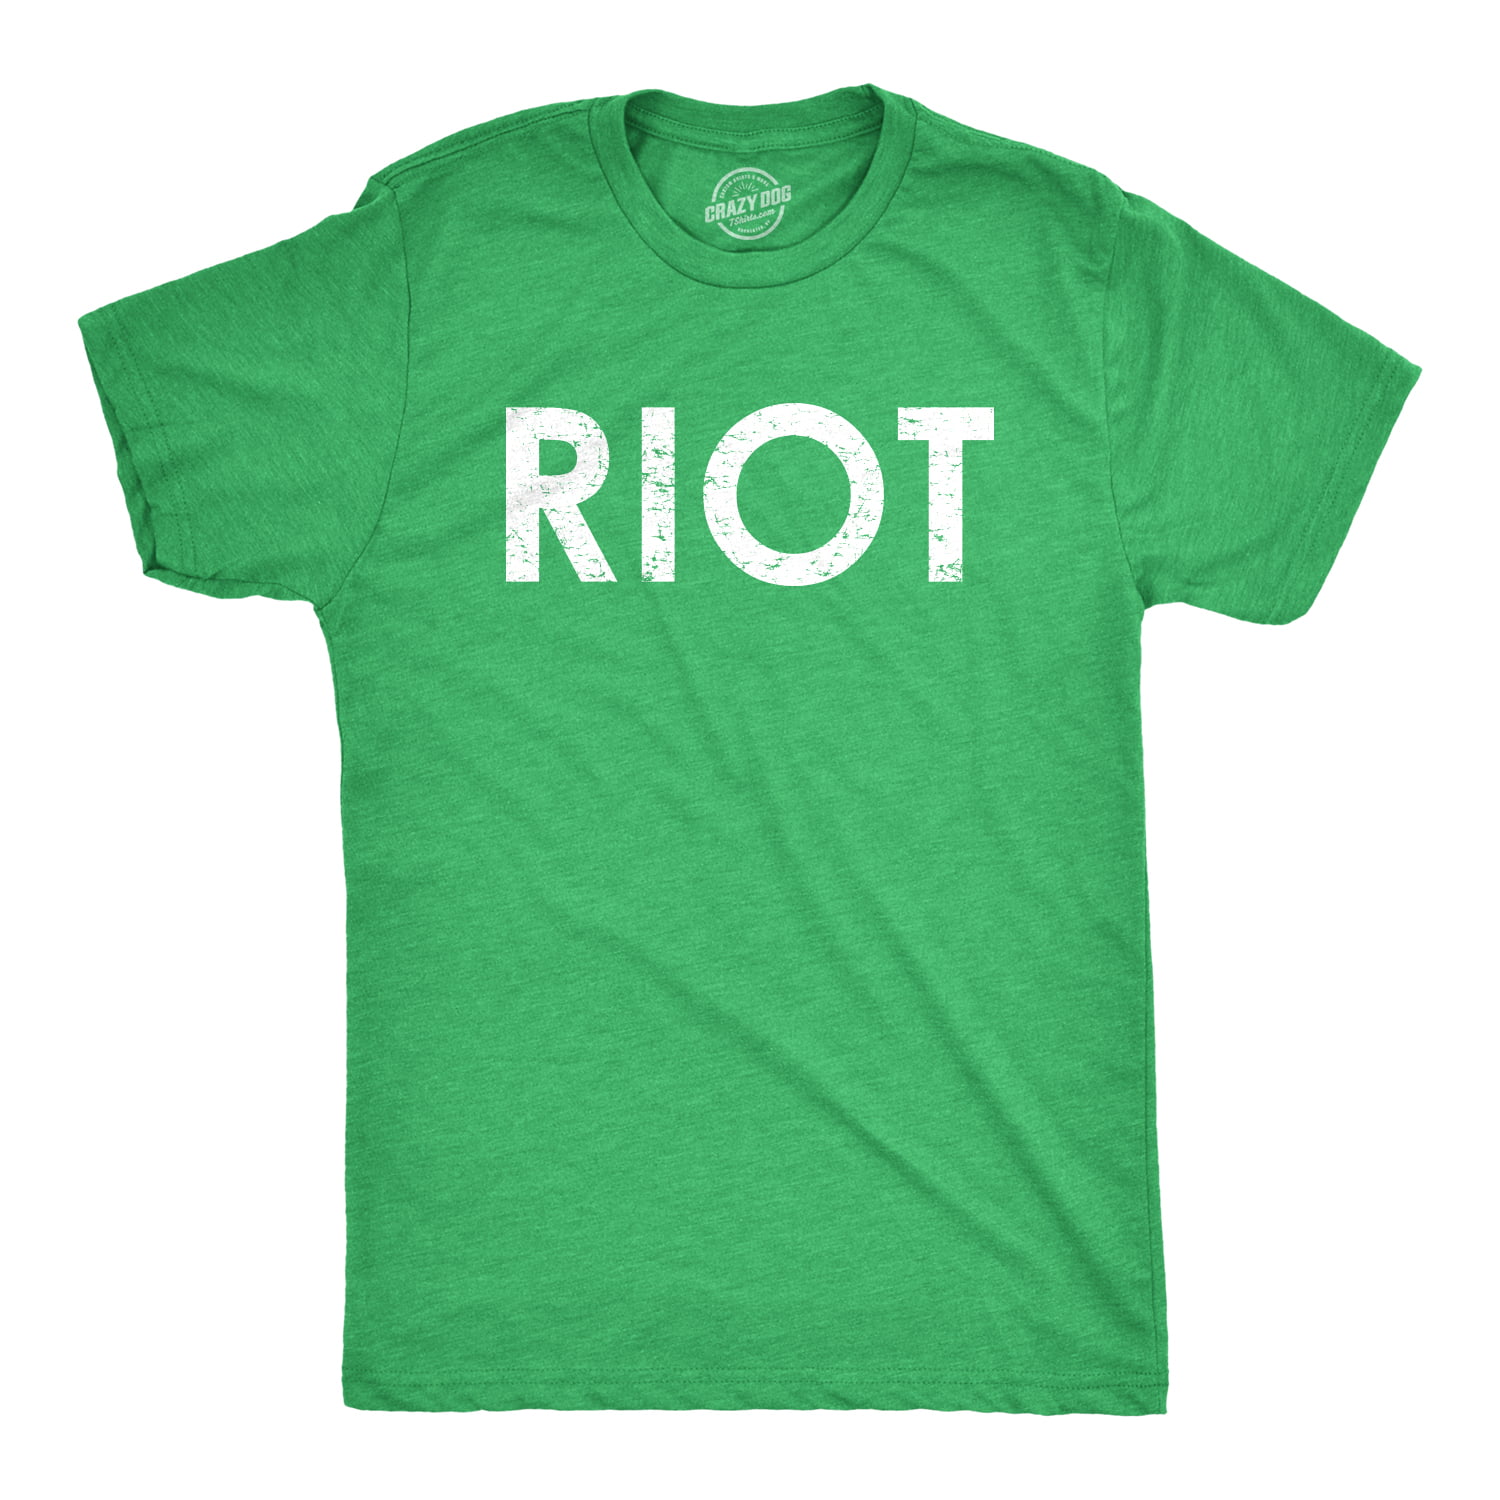 Riot T shirt Funny Shirts for Men Political Novelty Tees Humor ...